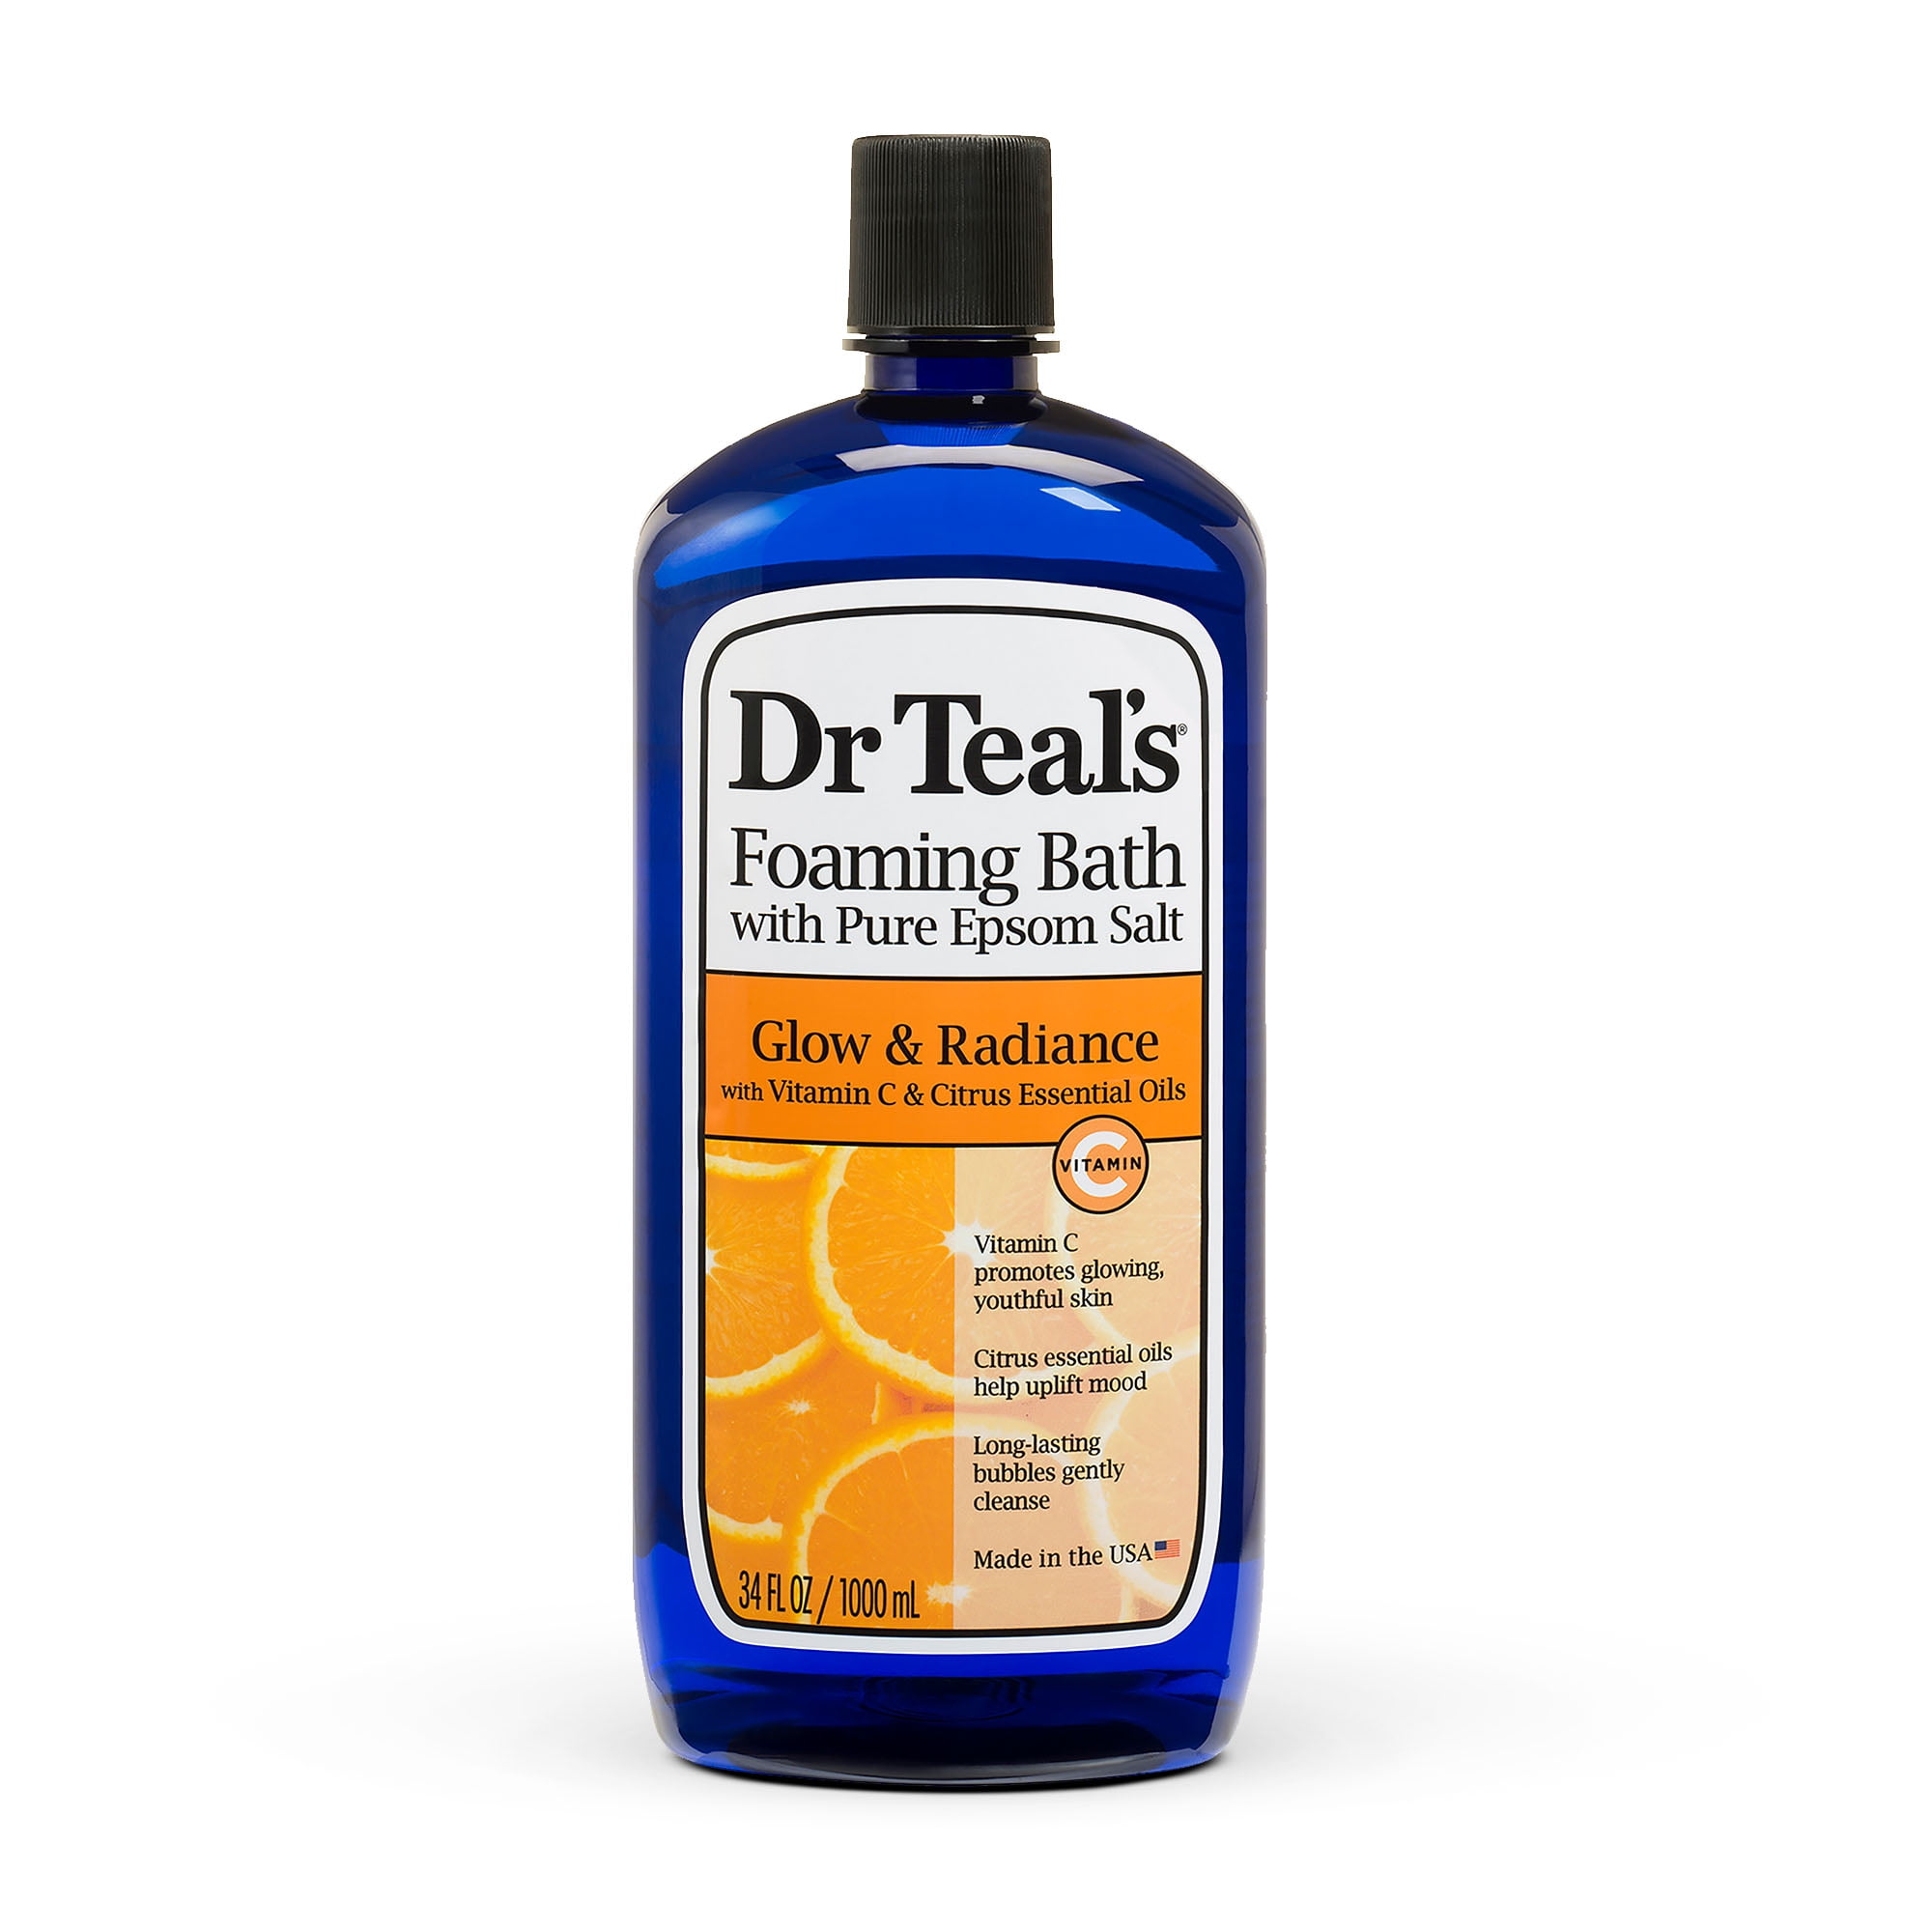 Dr Teal's Foaming Bath with Pure Epsom Salt, Glow & Radiance with Vitamin C & Citrus Essential Oils, 34 fl oz.